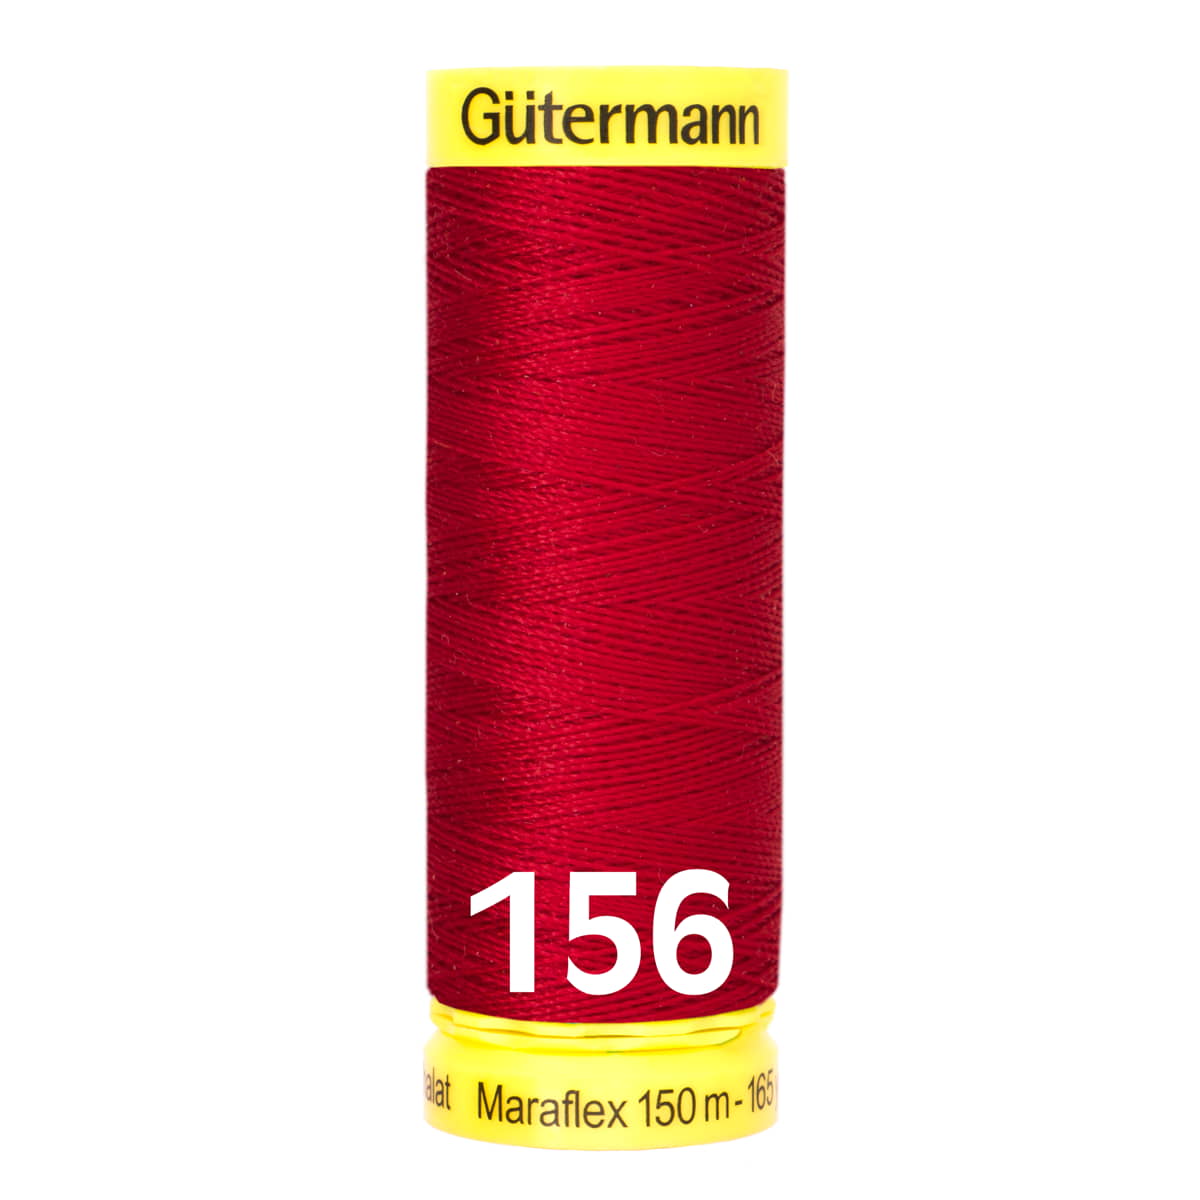 Gütermann MaraFlex 150m - 156 rood GUTERMANN-MARAFLEX-150-156 4029394999055 - Fourniturenkraam.nl